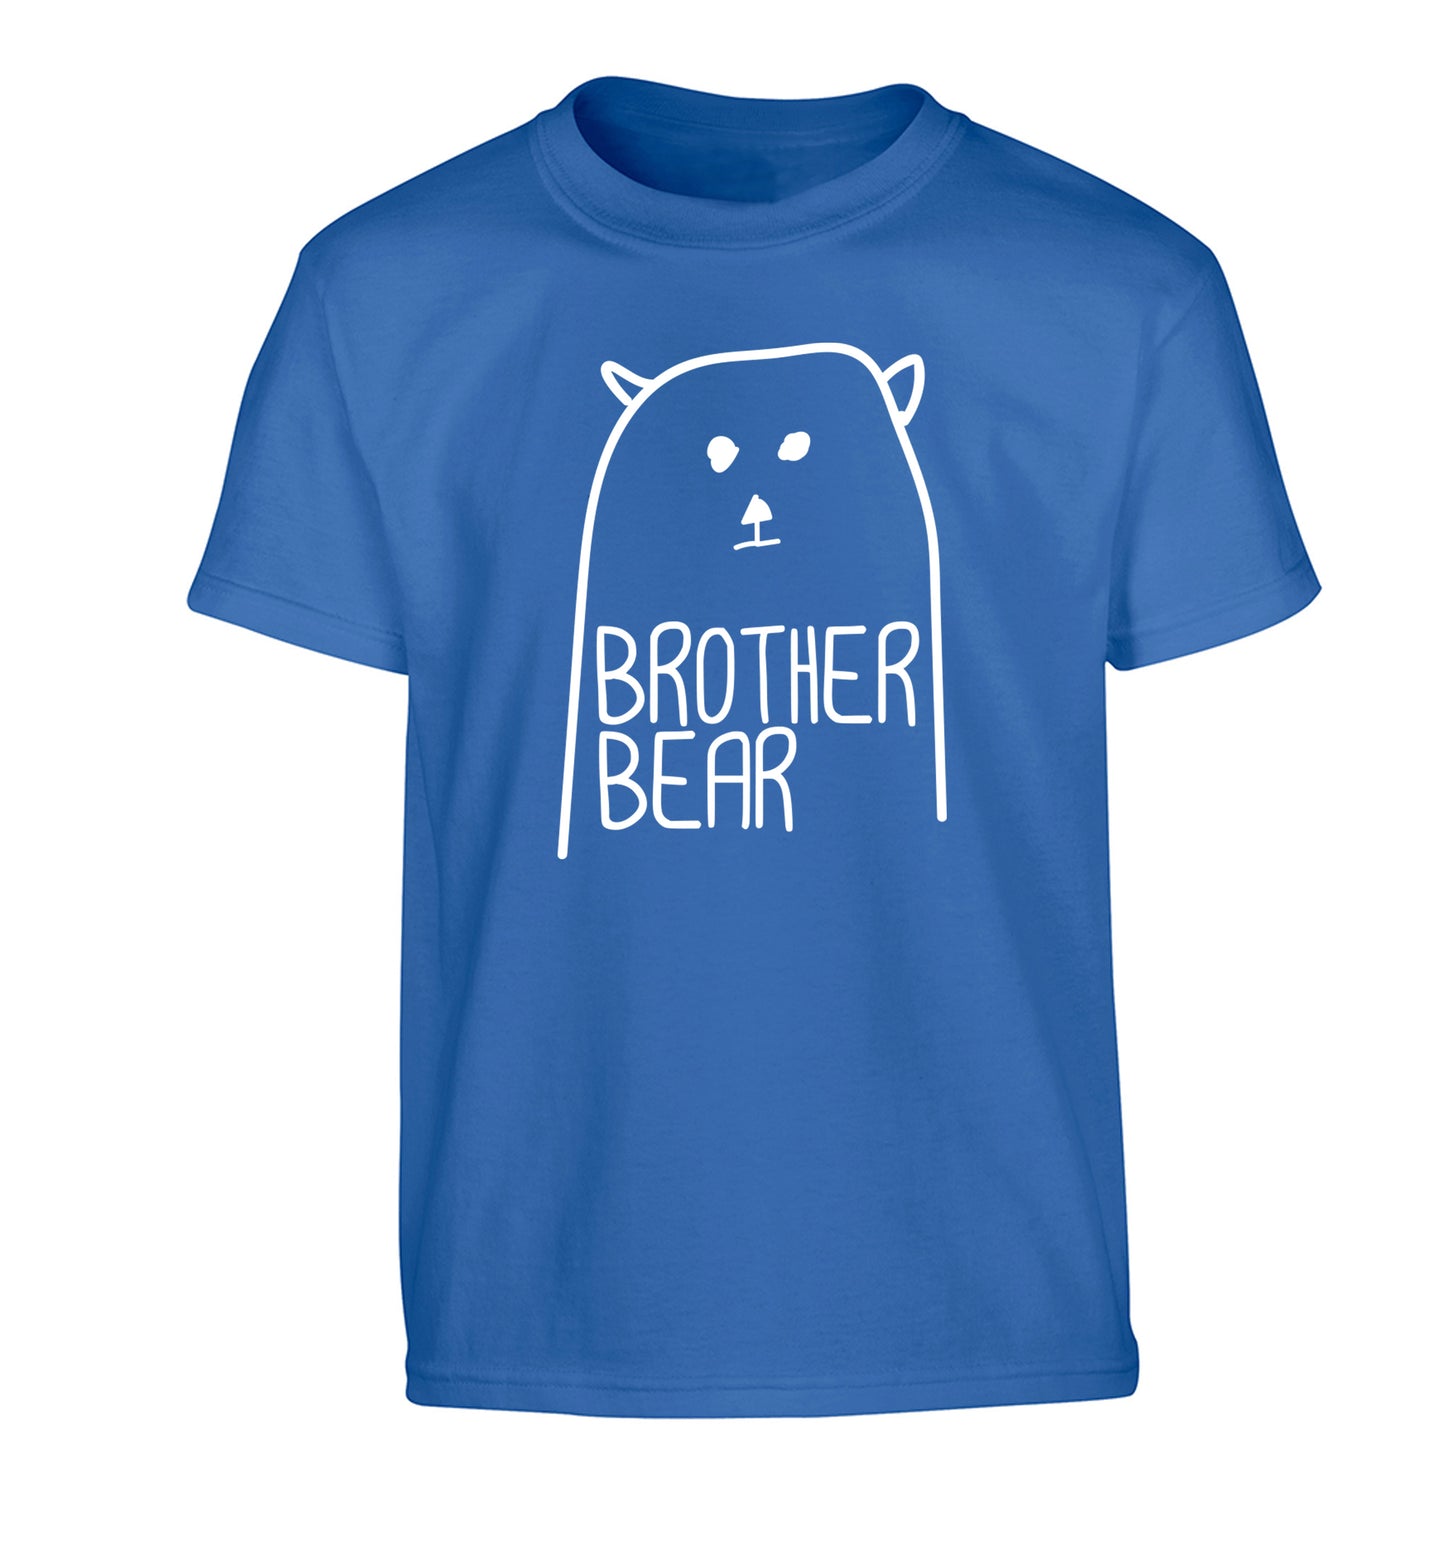 Brother bear Children's blue Tshirt 12-13 Years